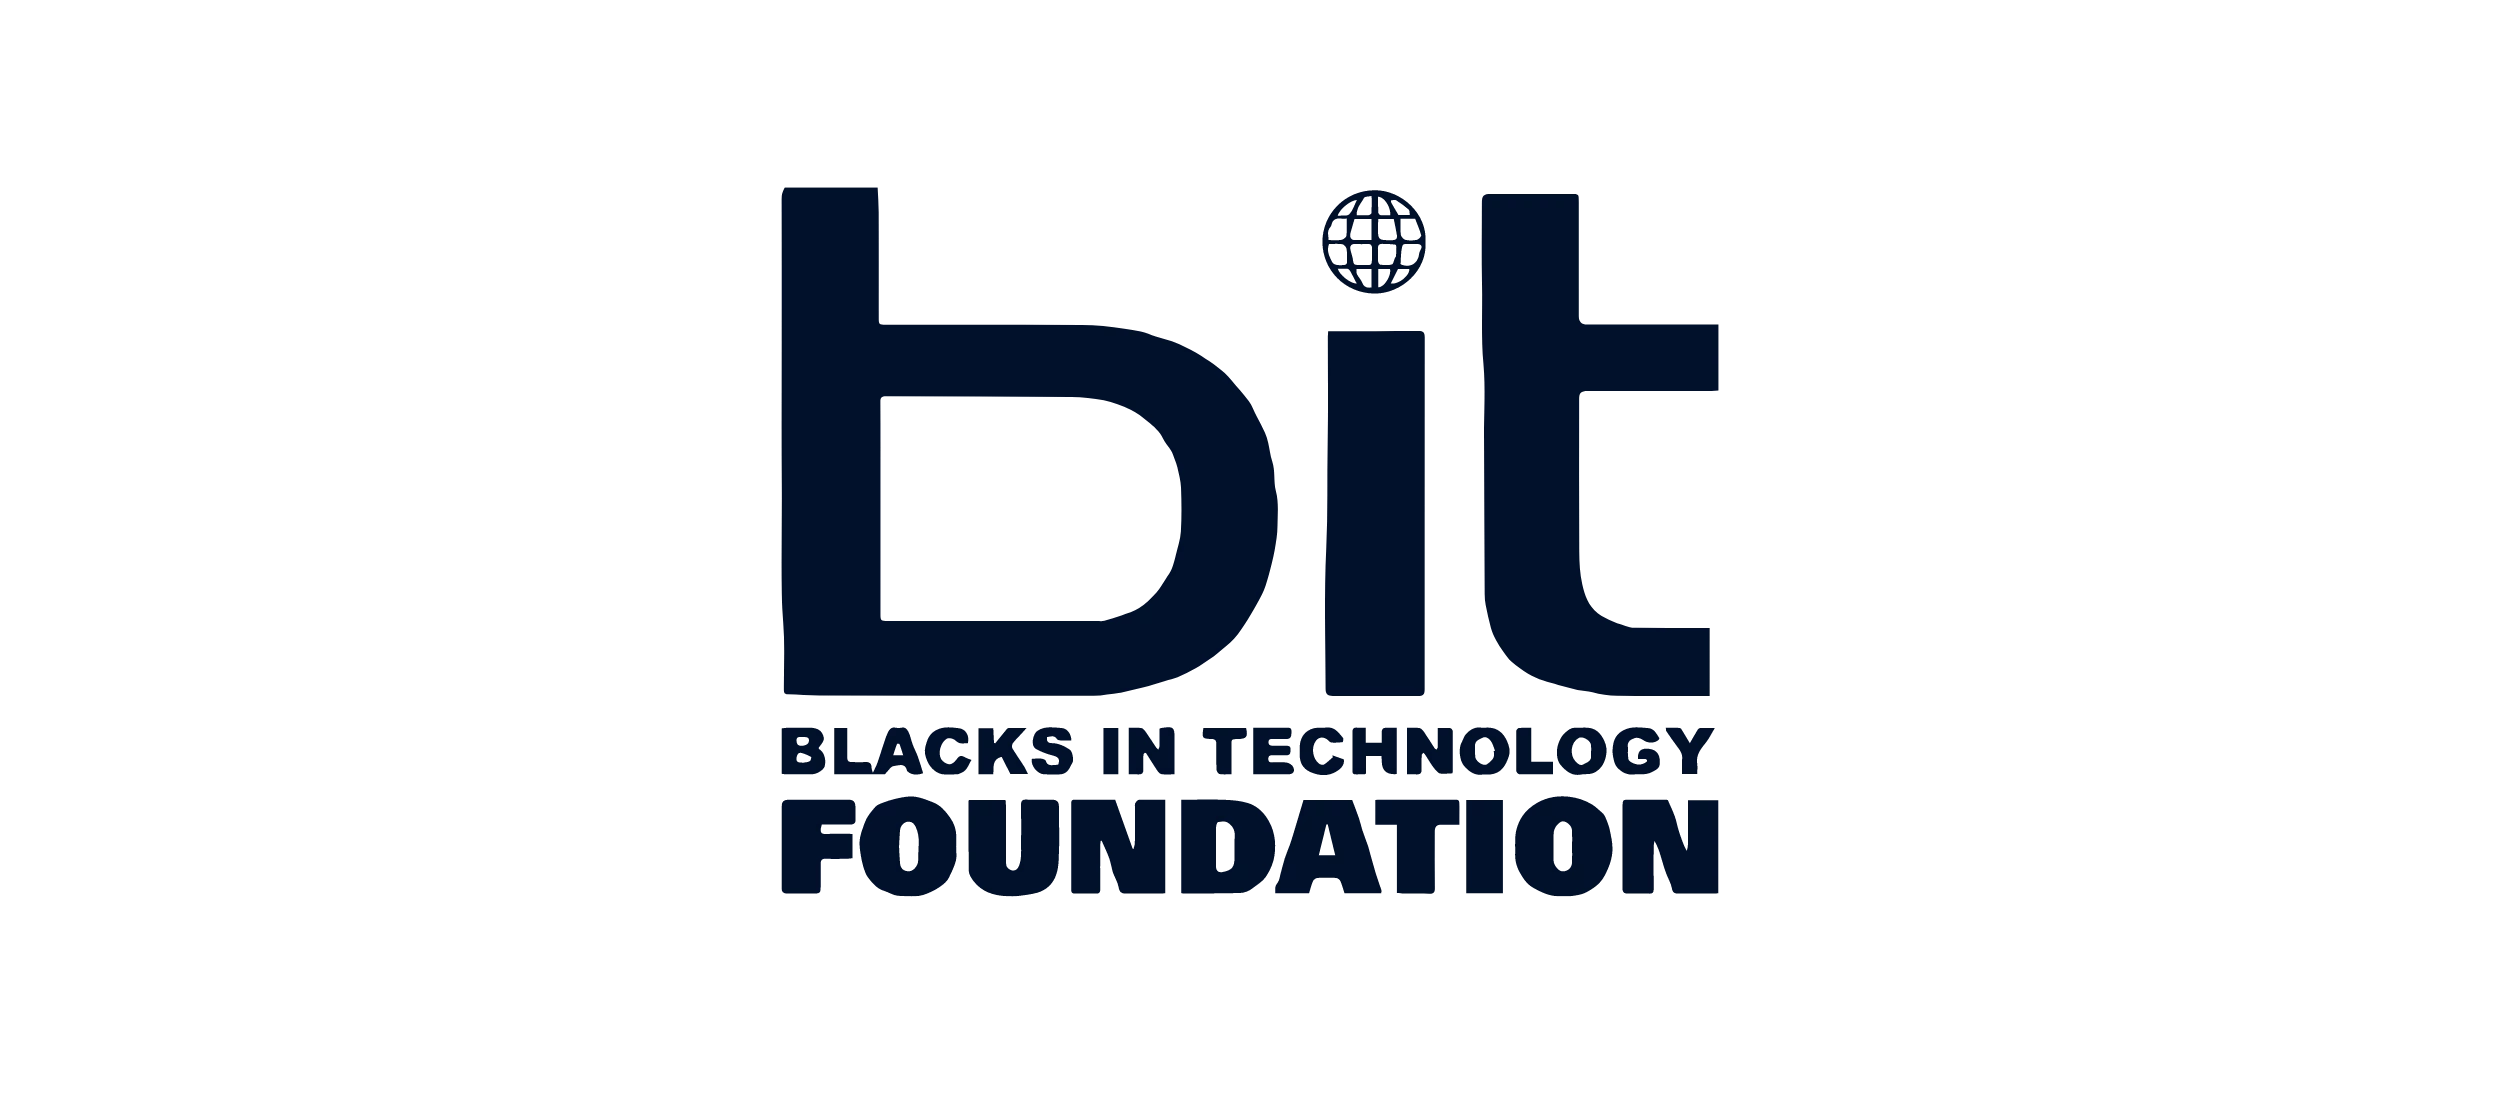 Bit Foundation